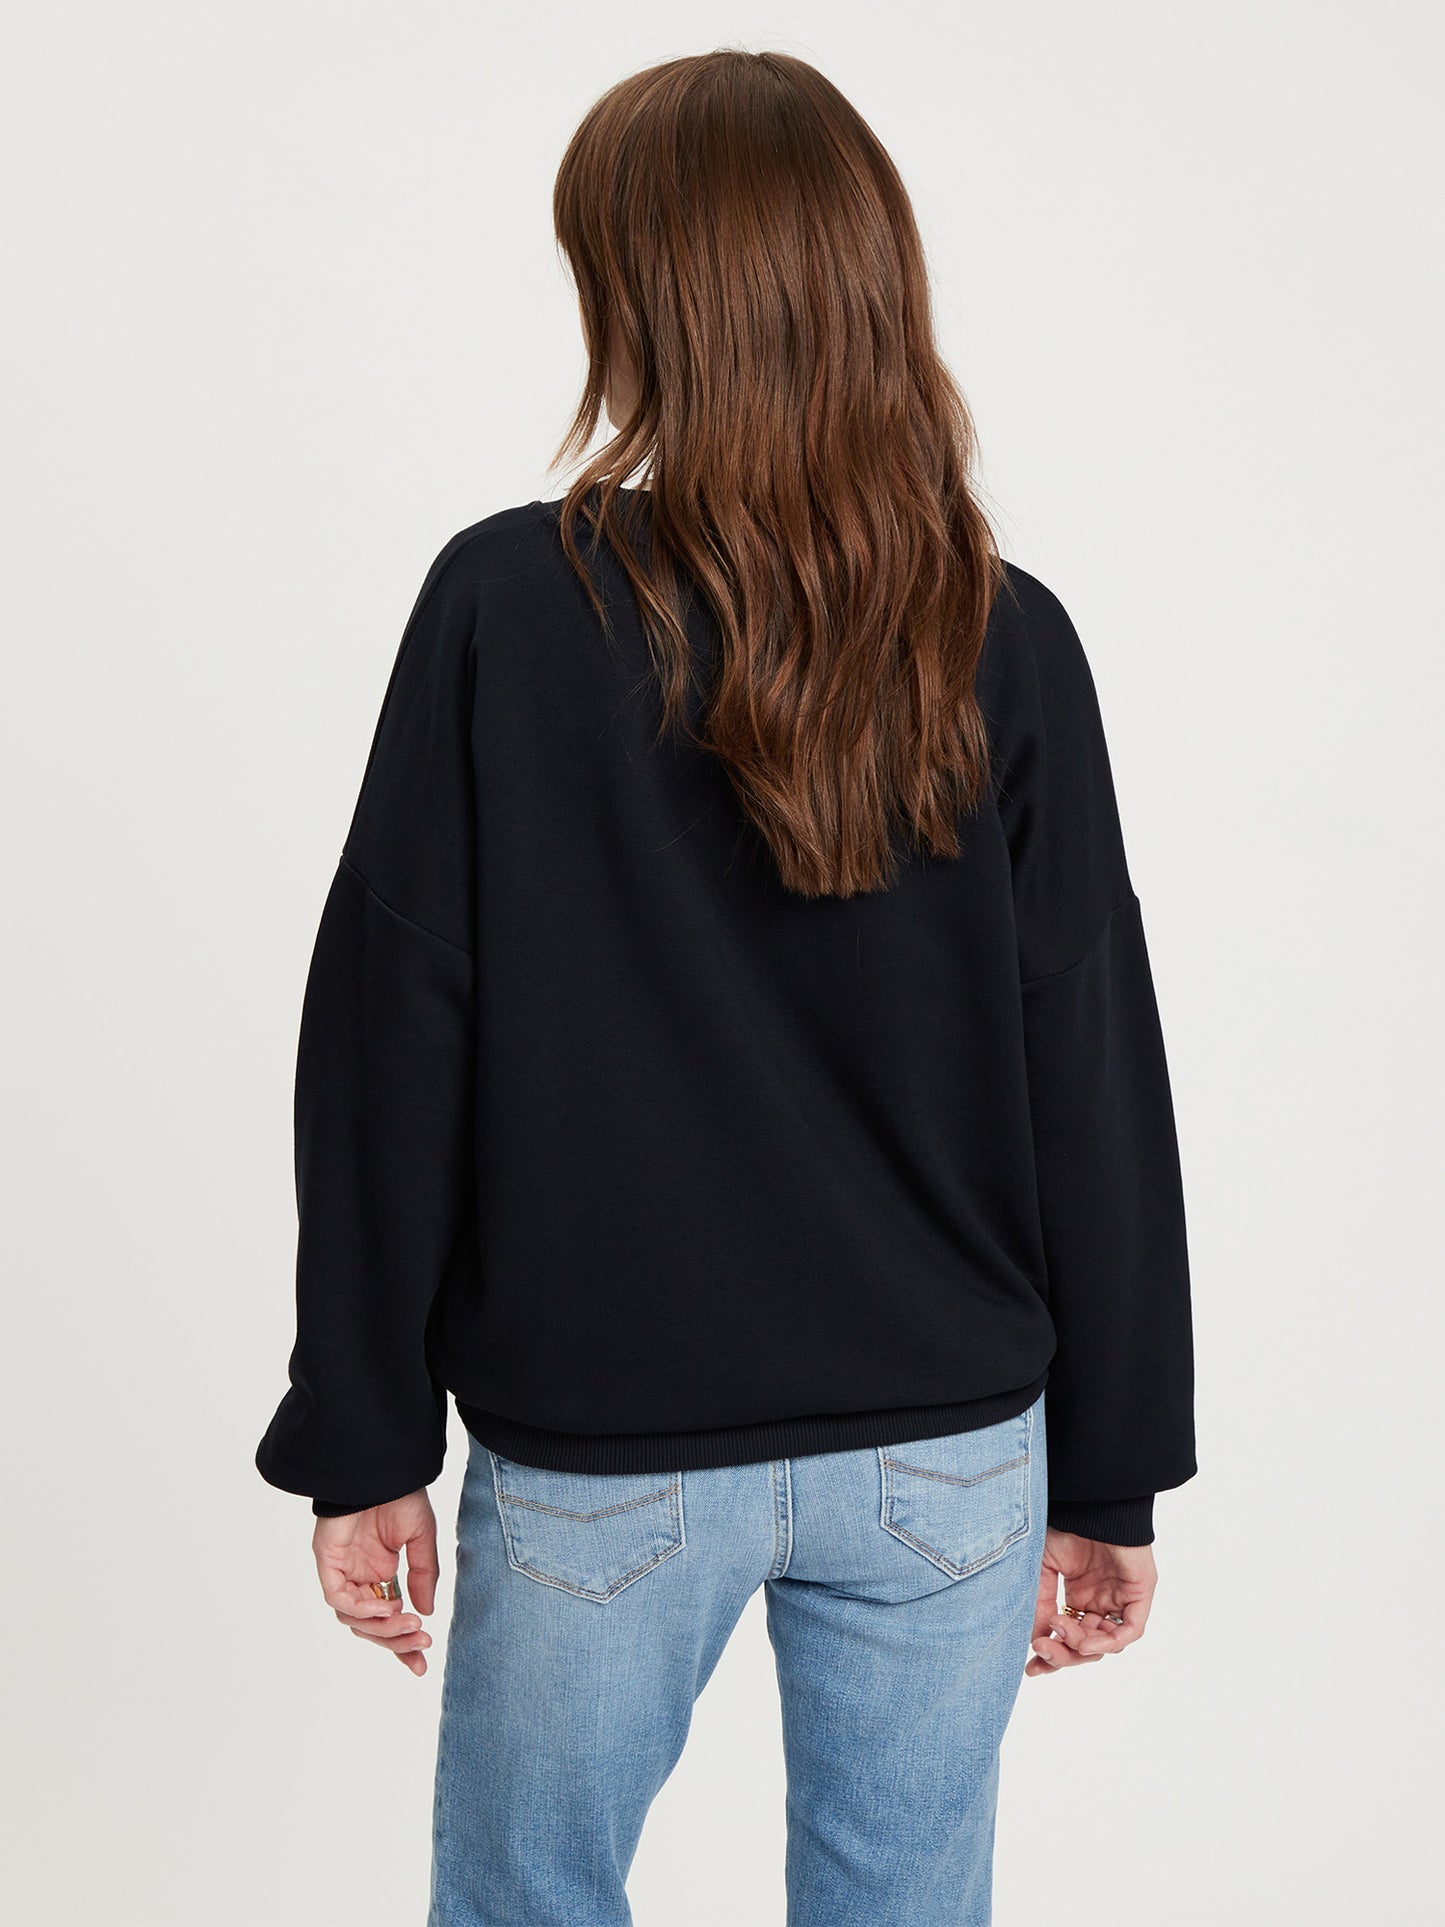 Women's regular sweatshirt with label print, dark blue.